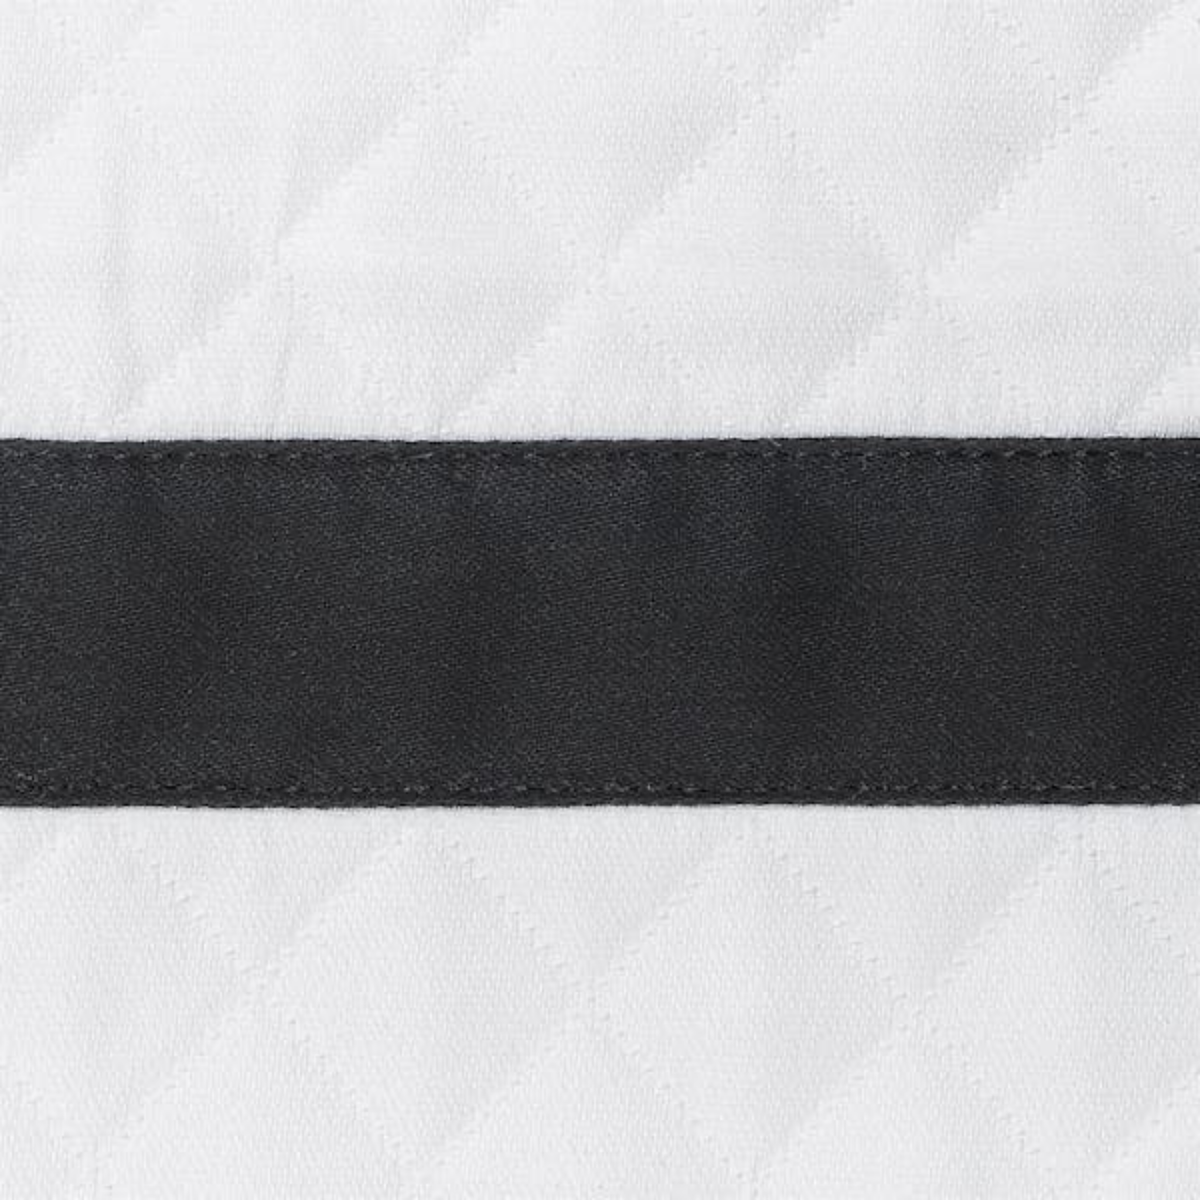 Swatch Sample of Black Matouk Lowell Matelassé Bedding